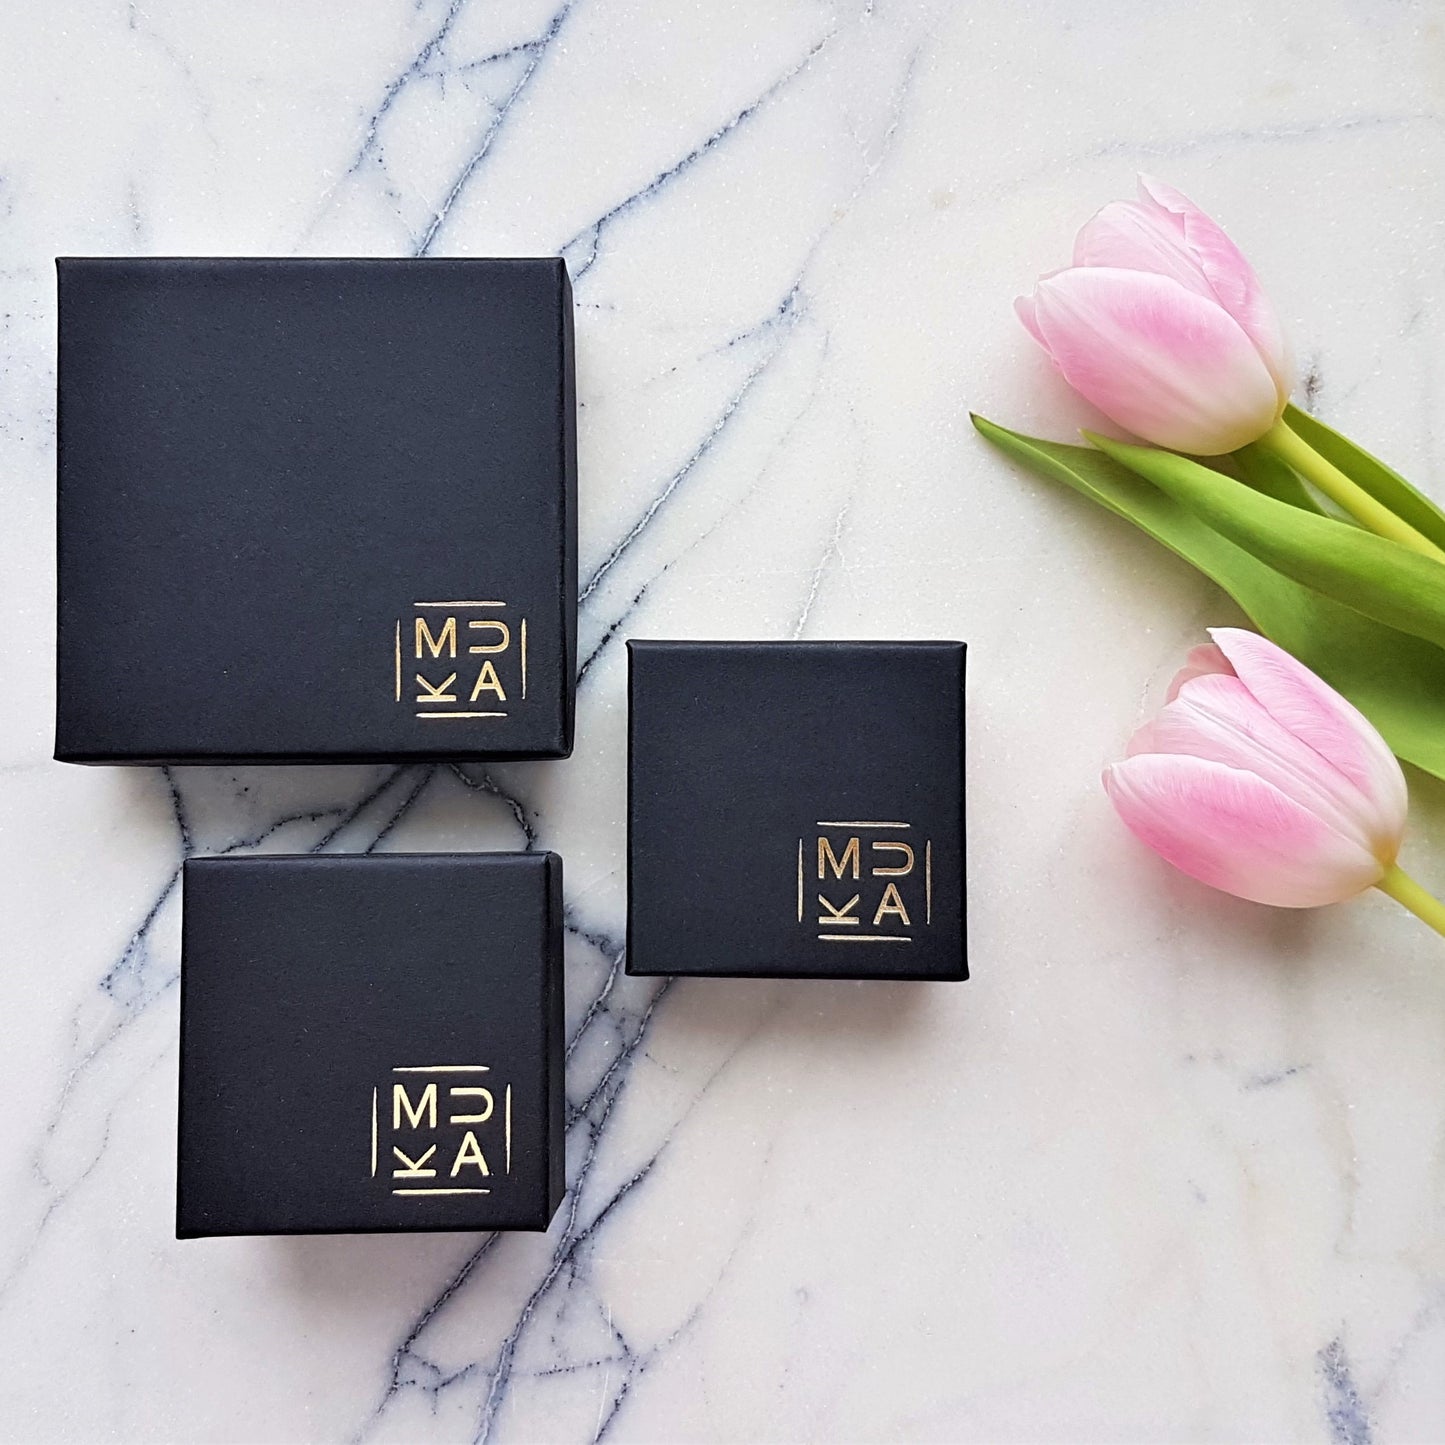 Stylish black jewellery boxes with gold MUKA studio logo sat next to pink tulip flowers